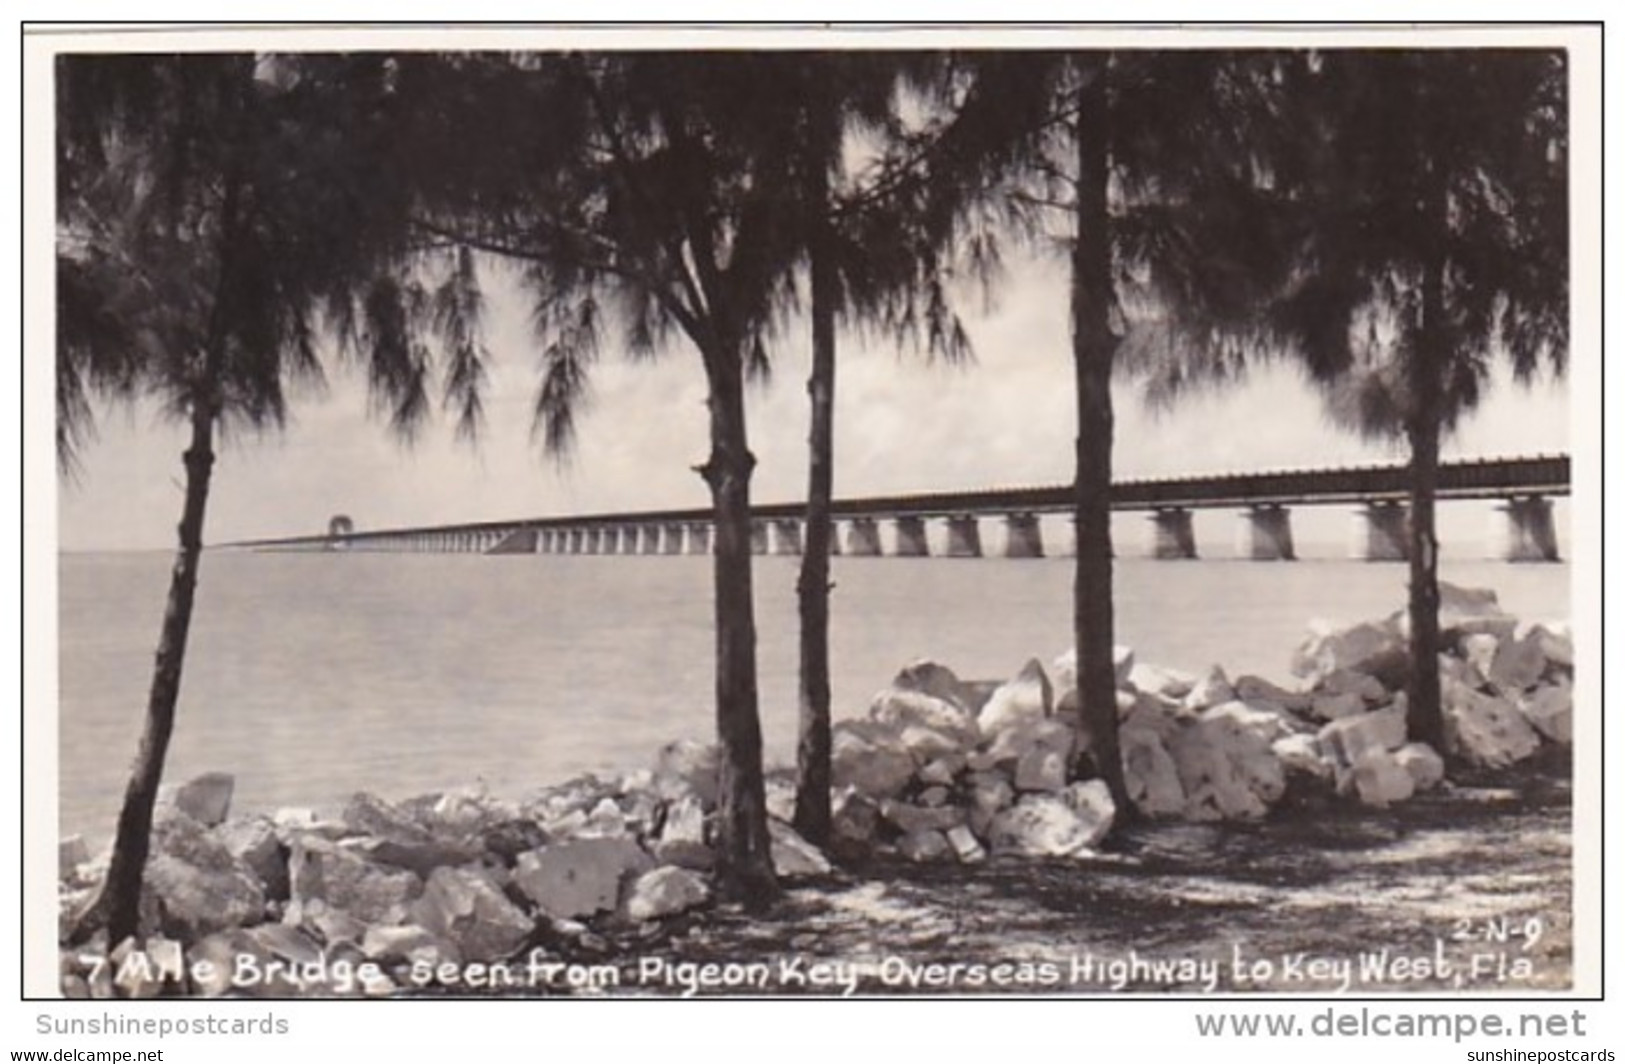 Florida Keys 7 Mile Bridge Seen From Pigeon Key Overseas Highway To Key West Real Photo - Key West & The Keys